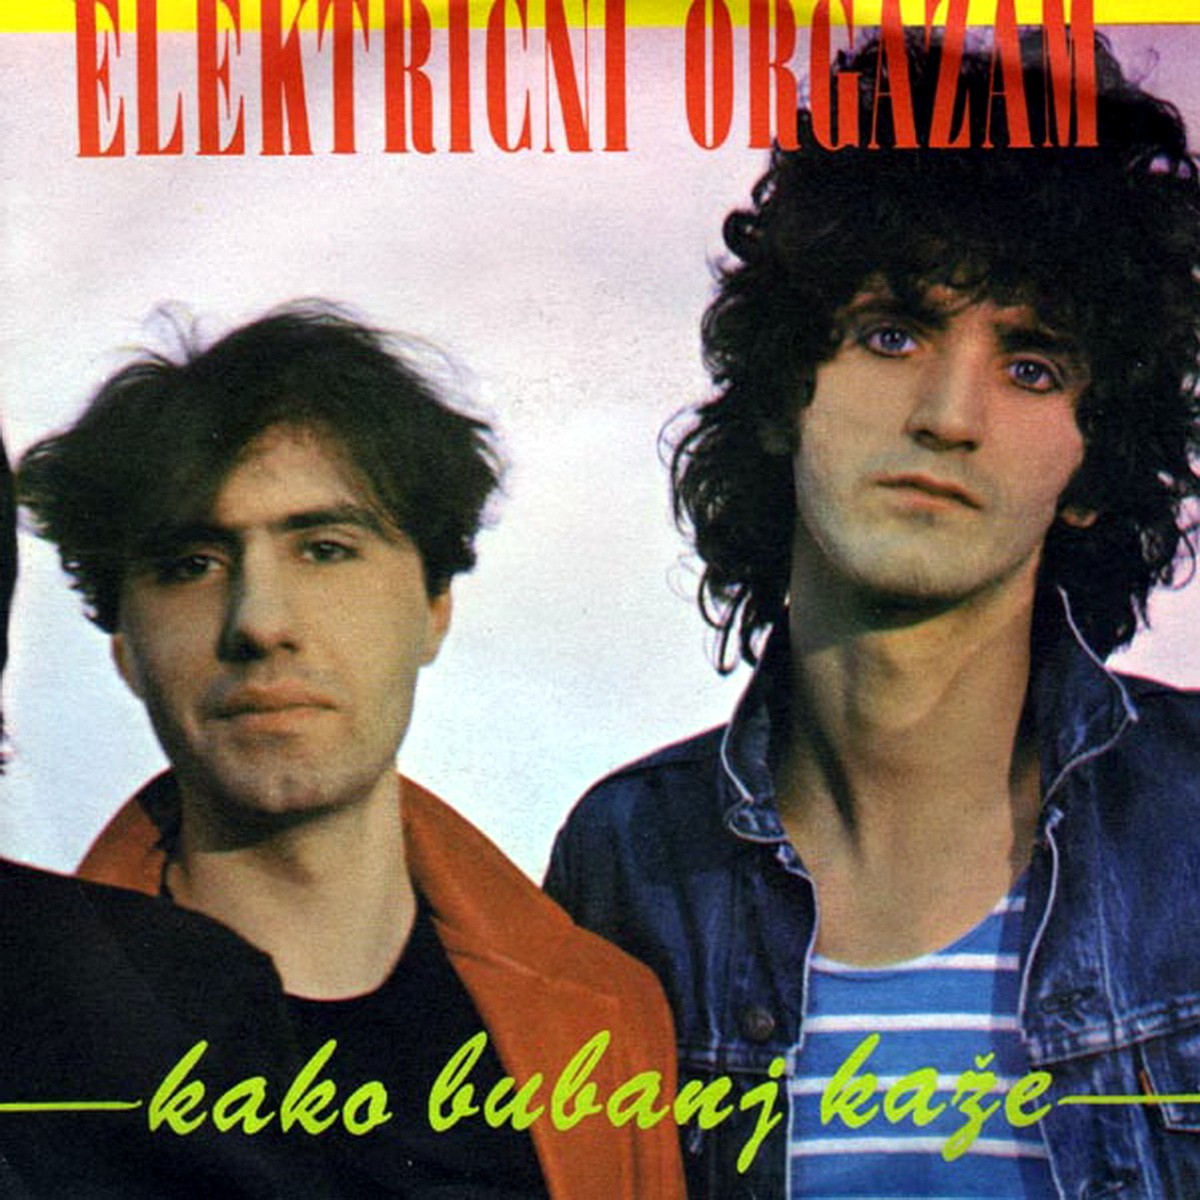 Elektricni Orgazam 1984 Kako bubanj kaze a